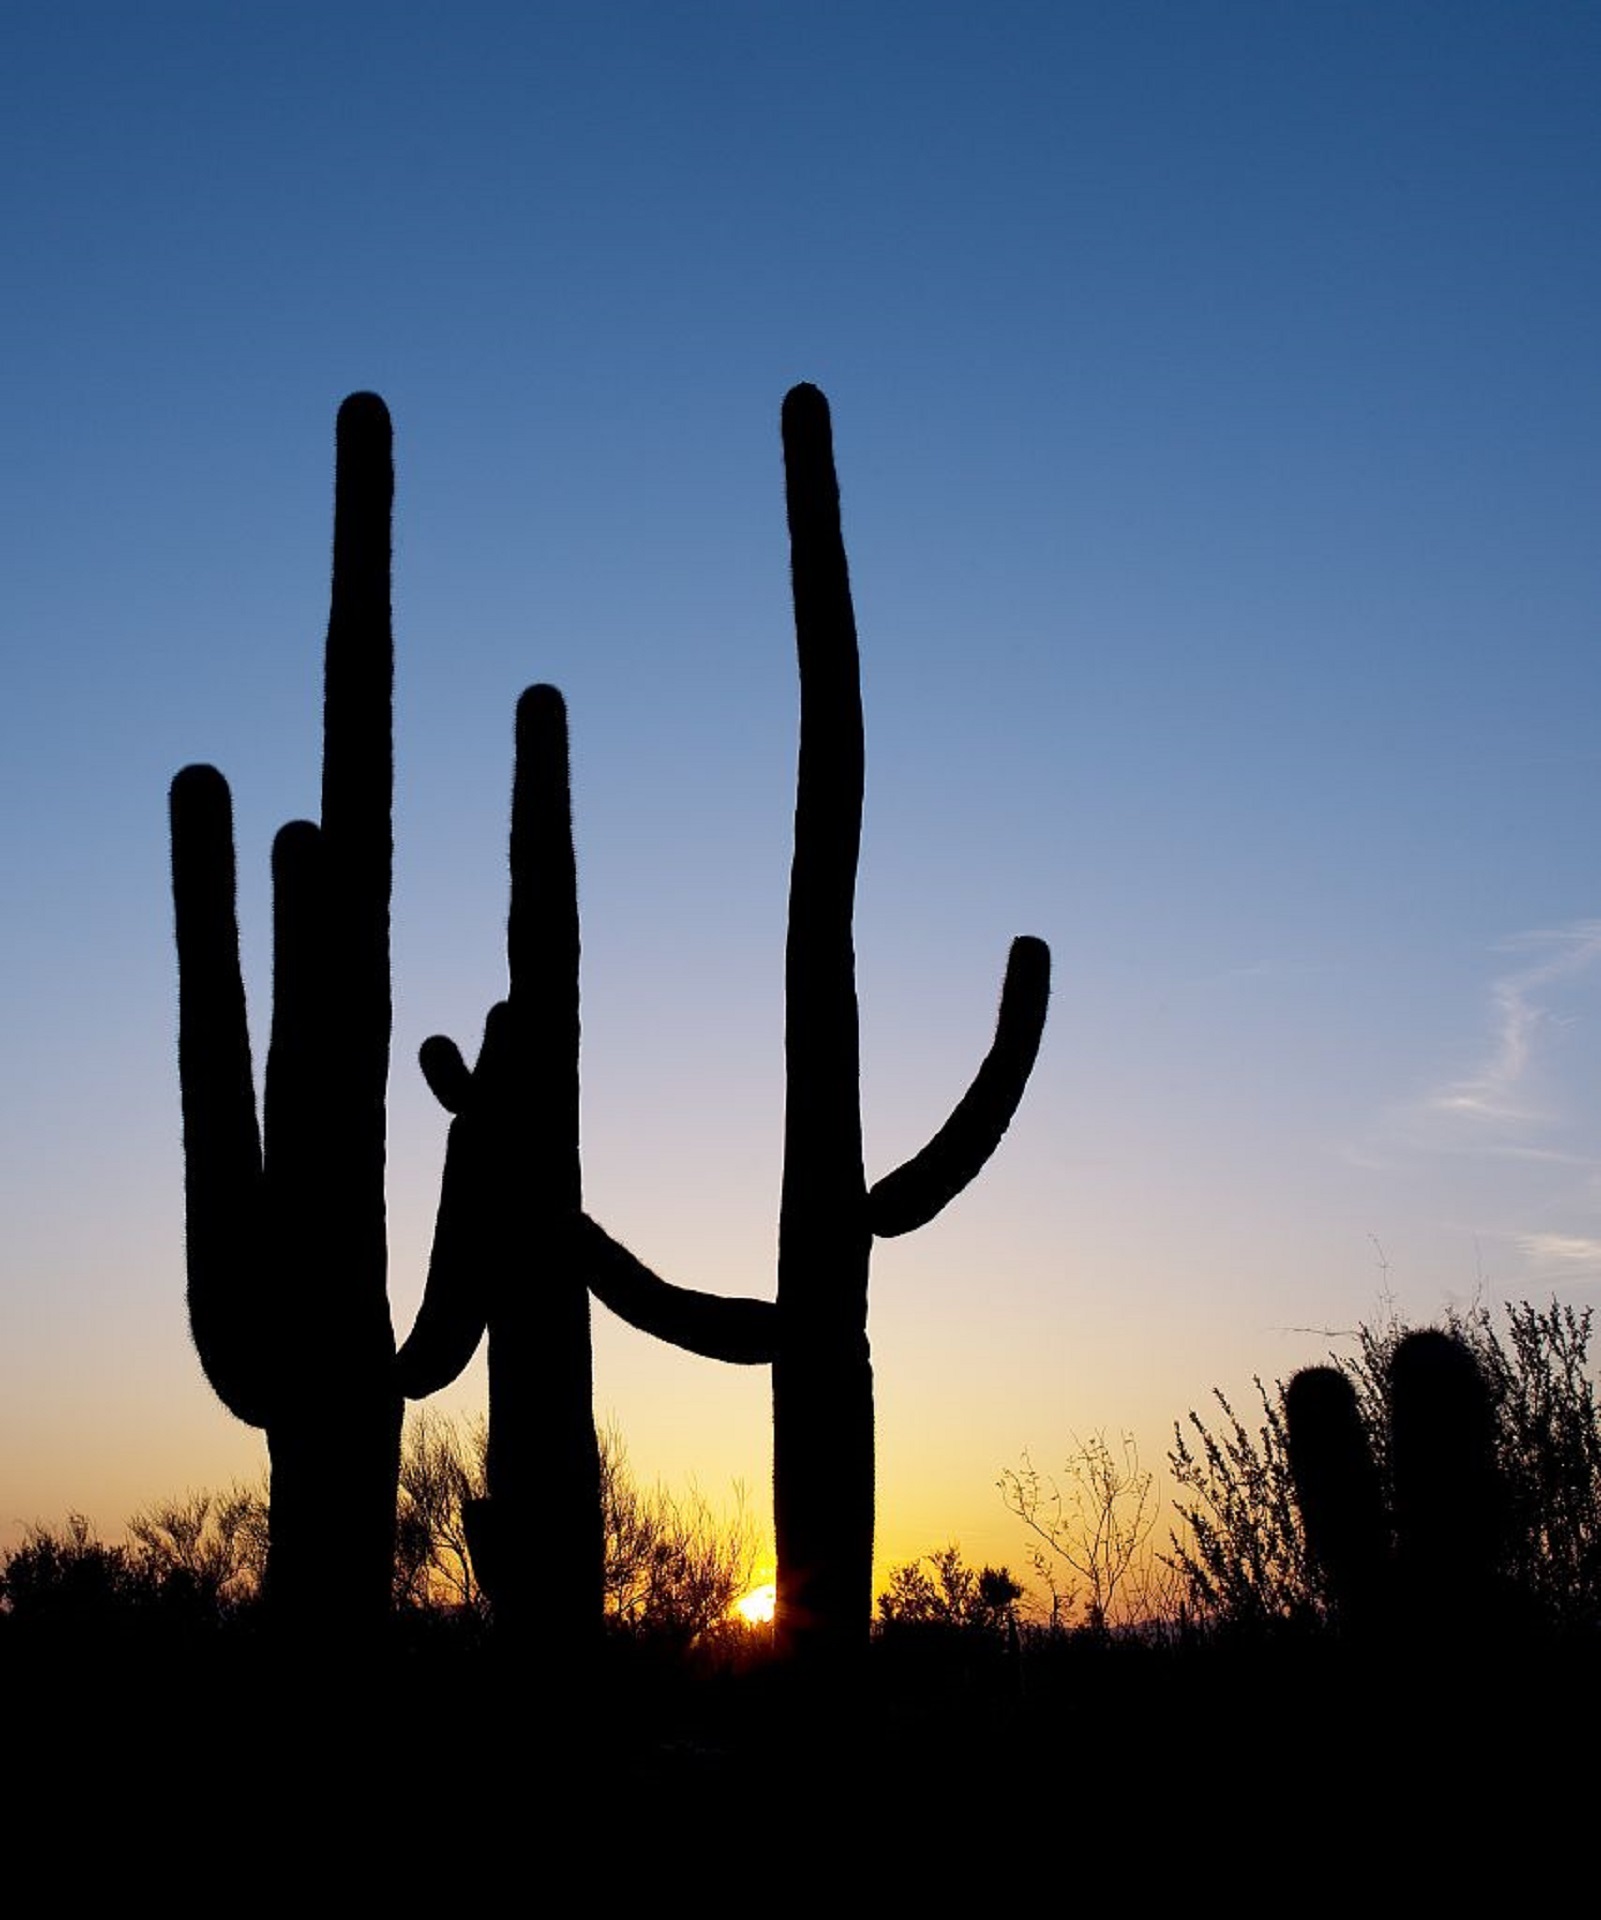 Saguaro cactus photo